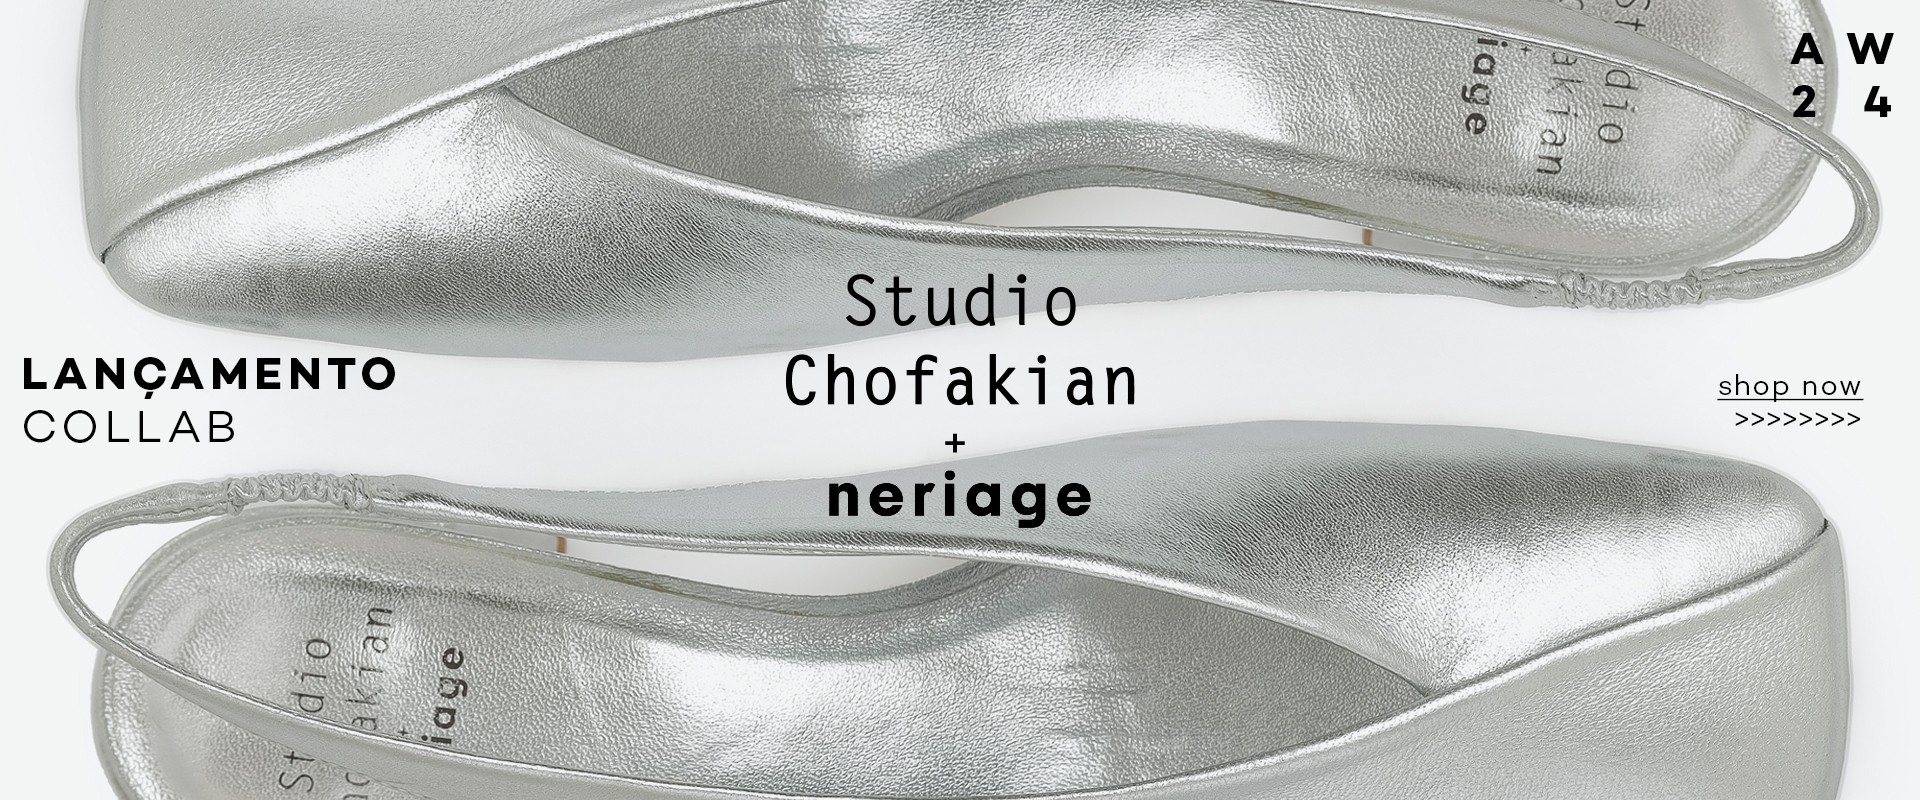 Collab Studio Chofakian + Neriage